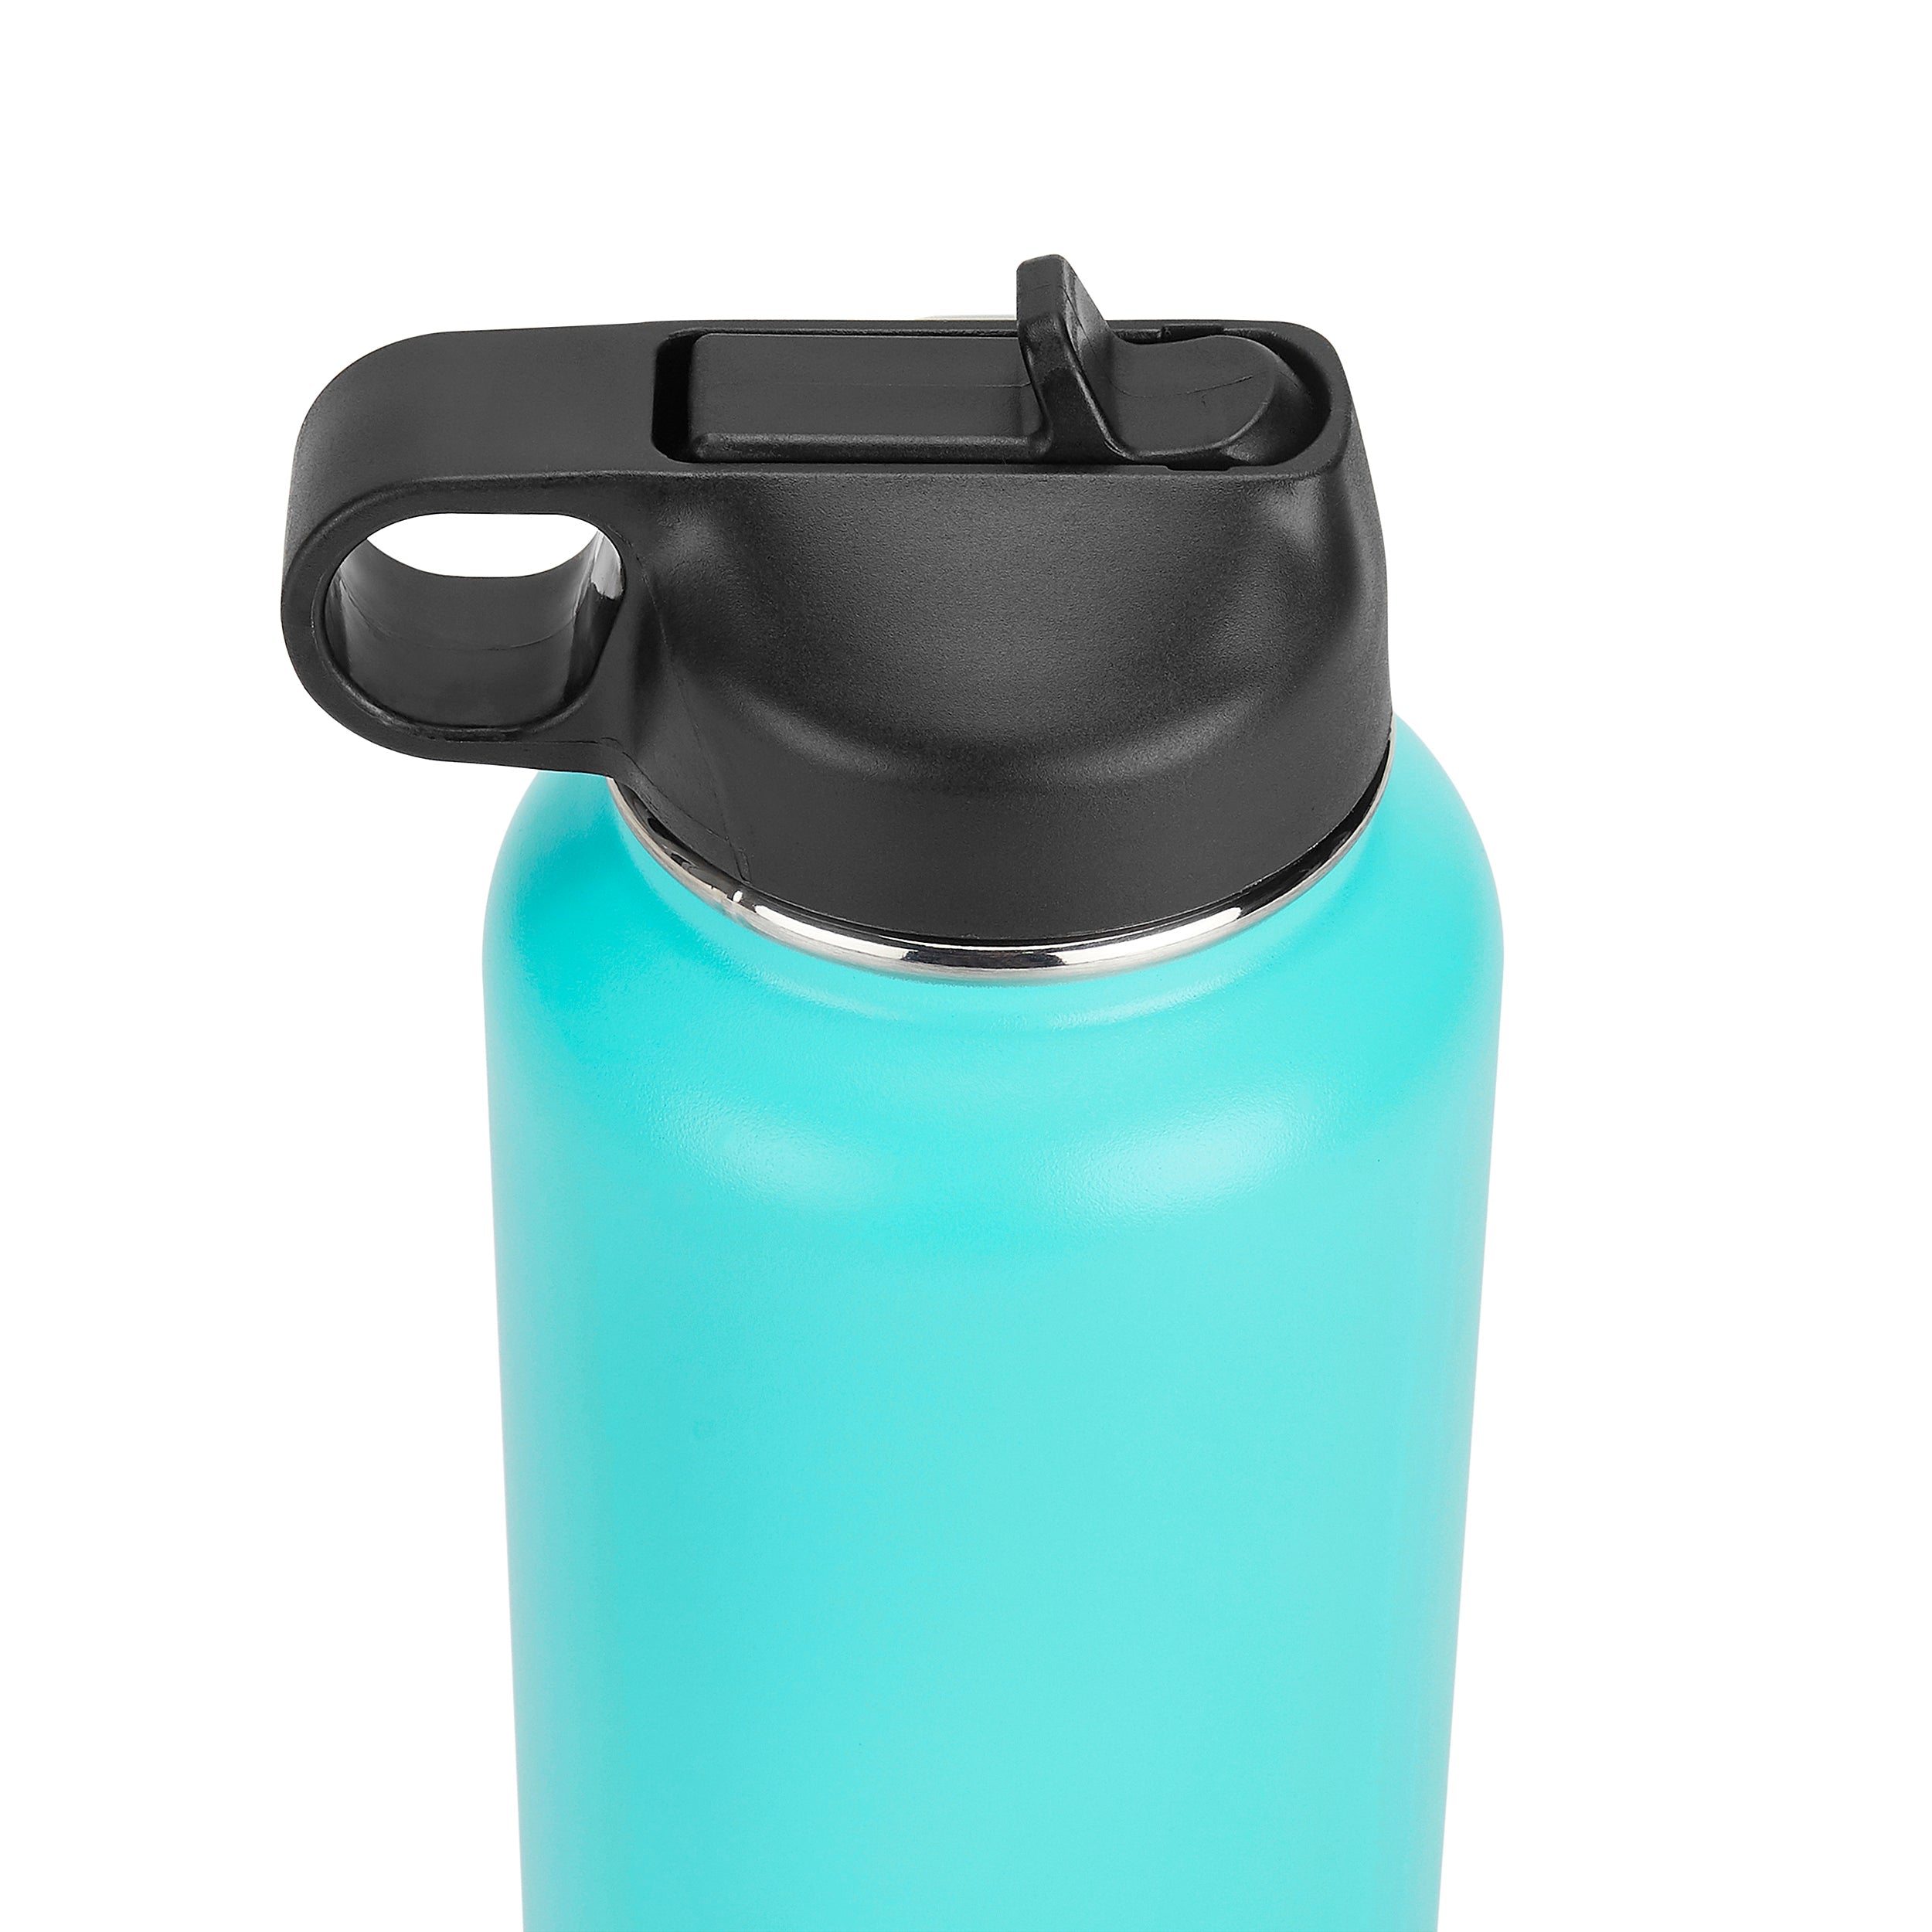 32oz Hydro Water Bottle for Christmas Kids